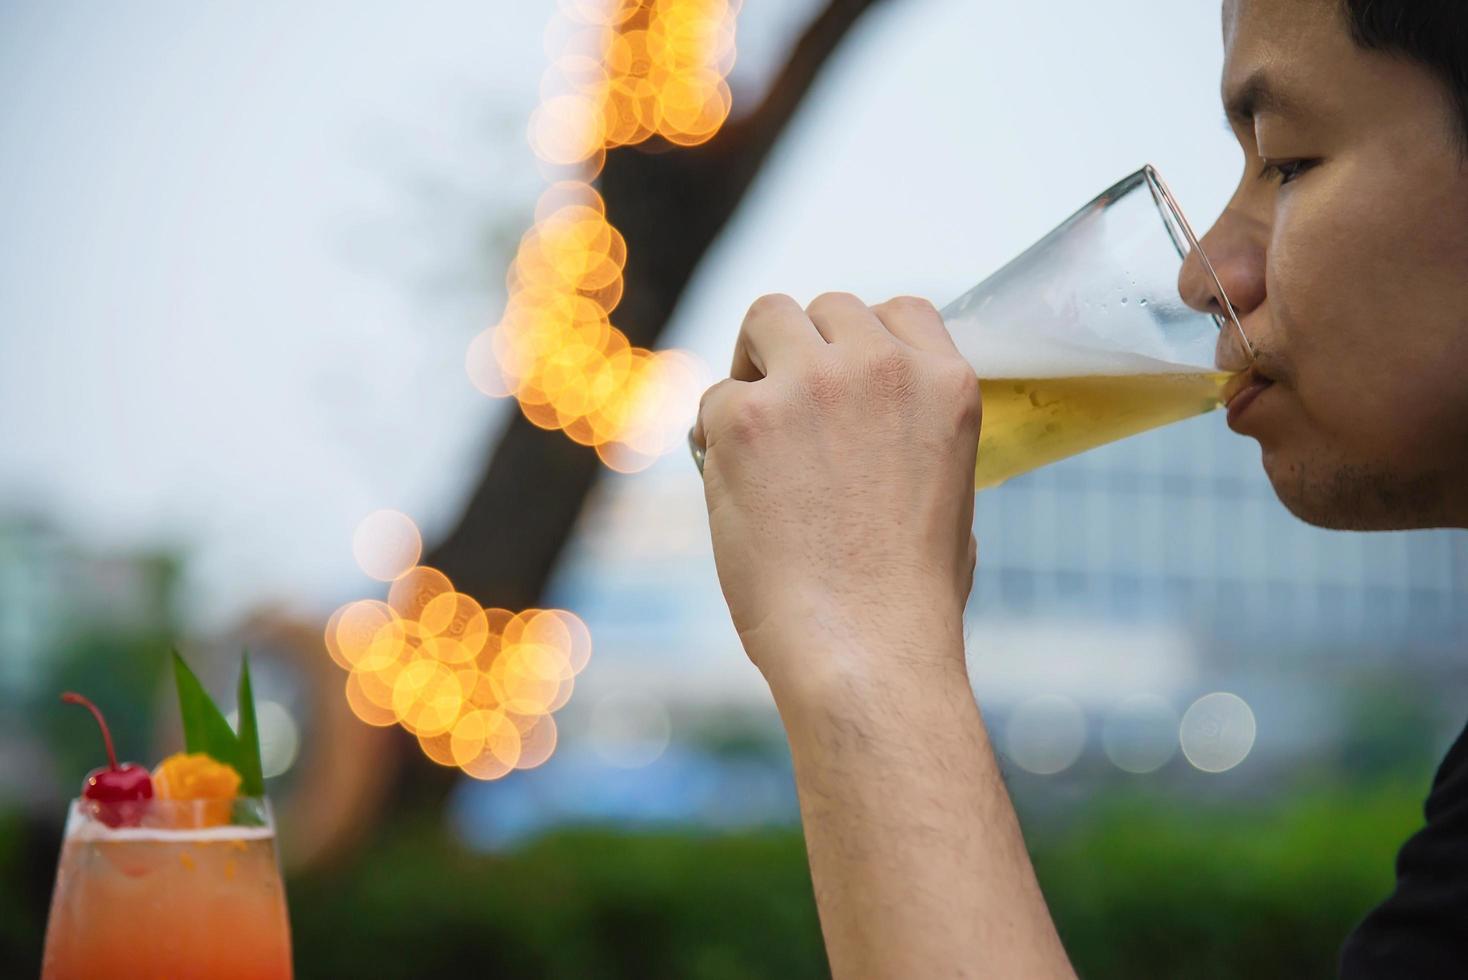 Asian man drinking beer in green garden restaurant - people relax enjoy soft drink lifestyle concept photo